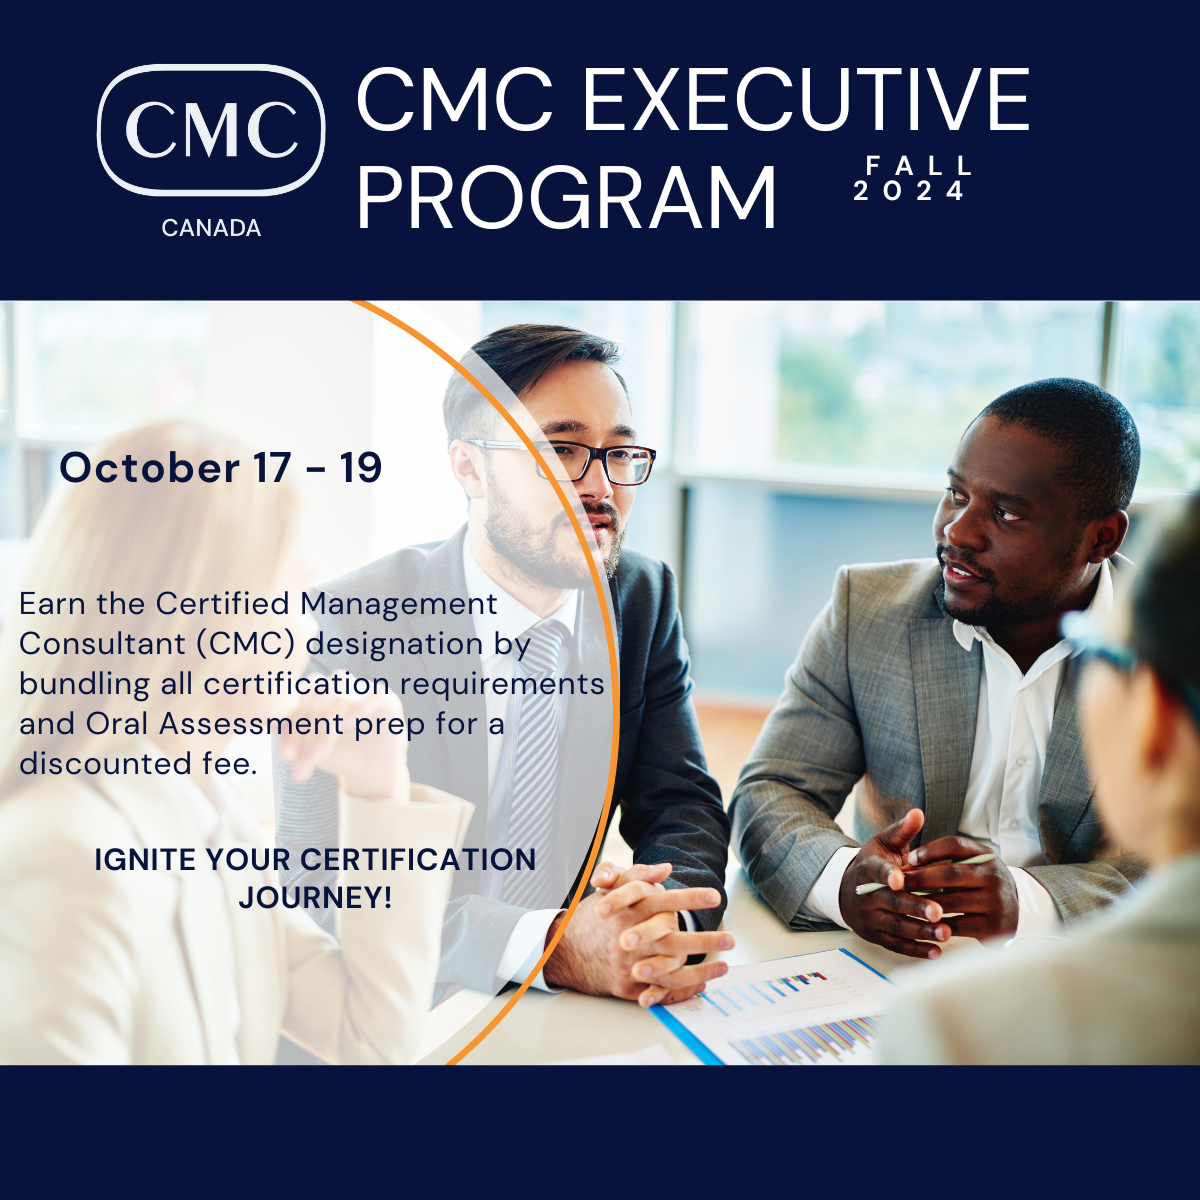 CMC Executive Program Fall 2024